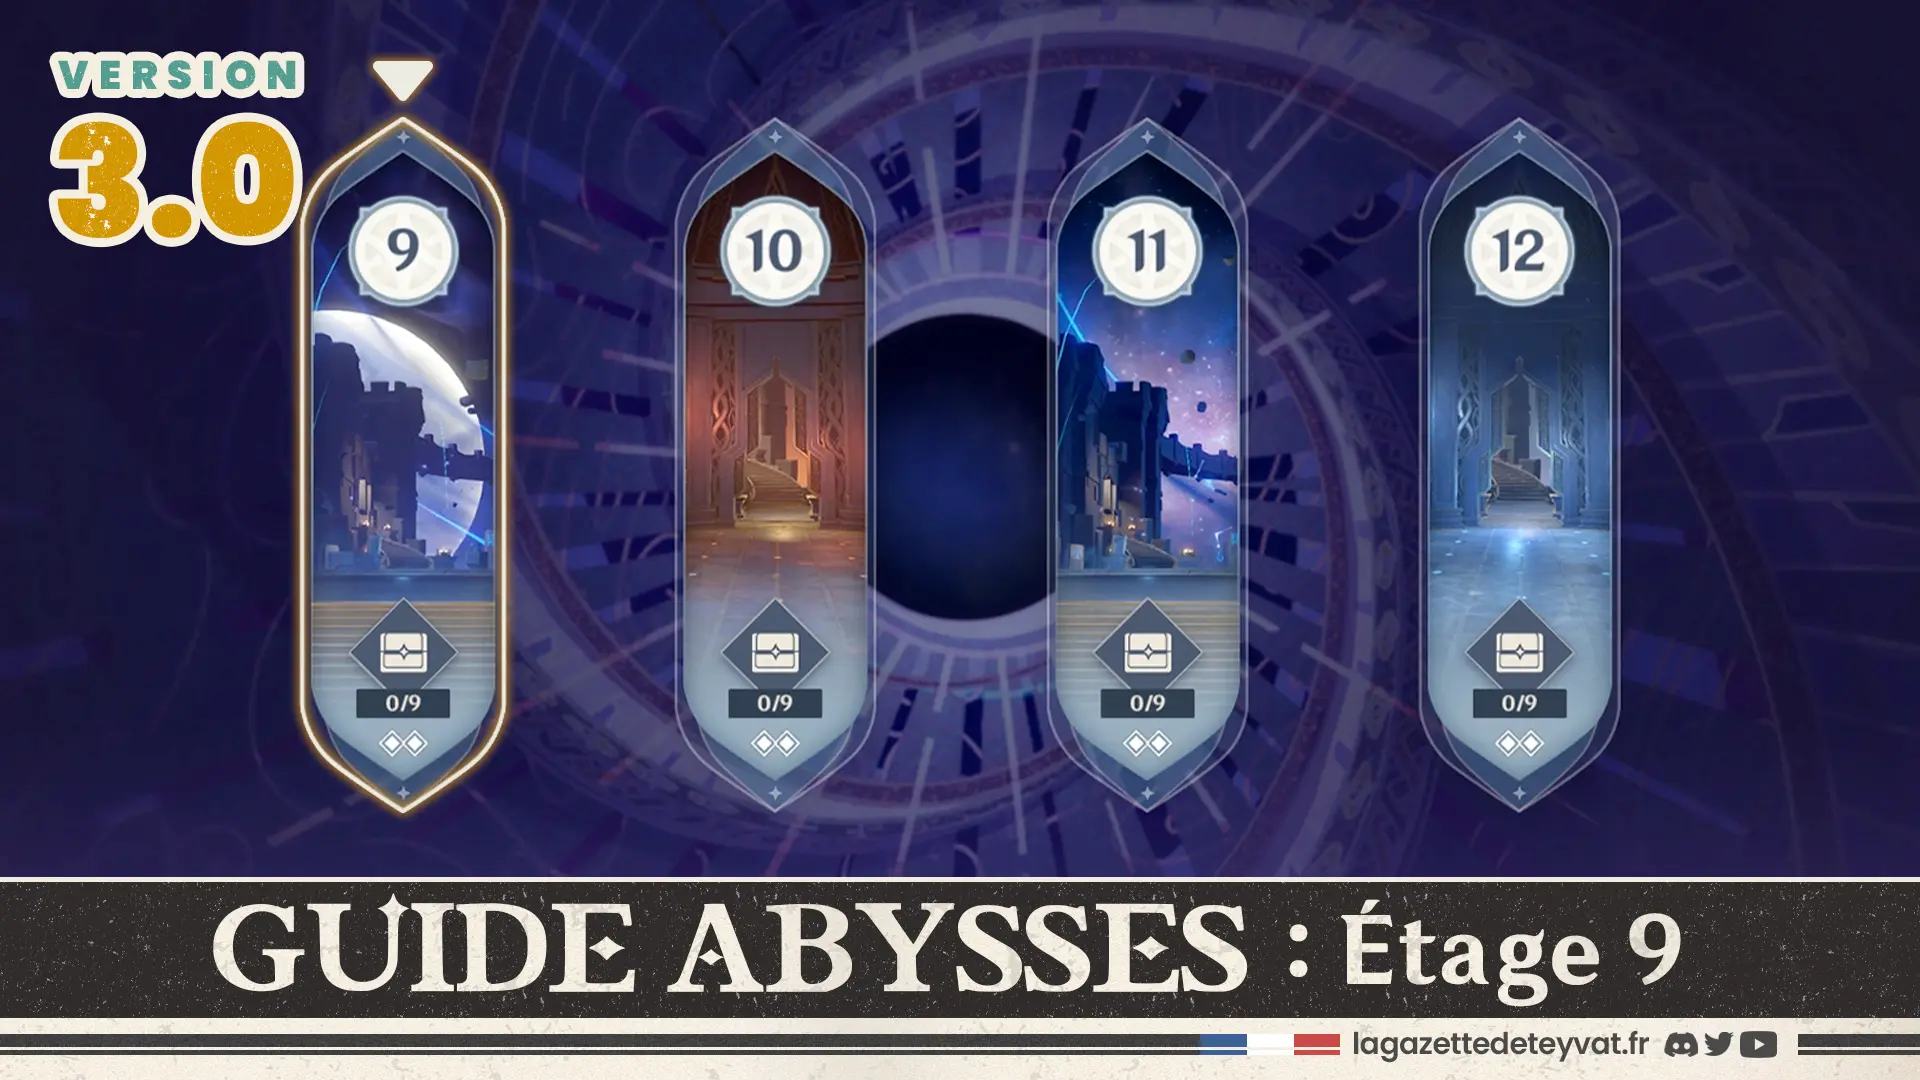 Abysses 3.0 étage 9